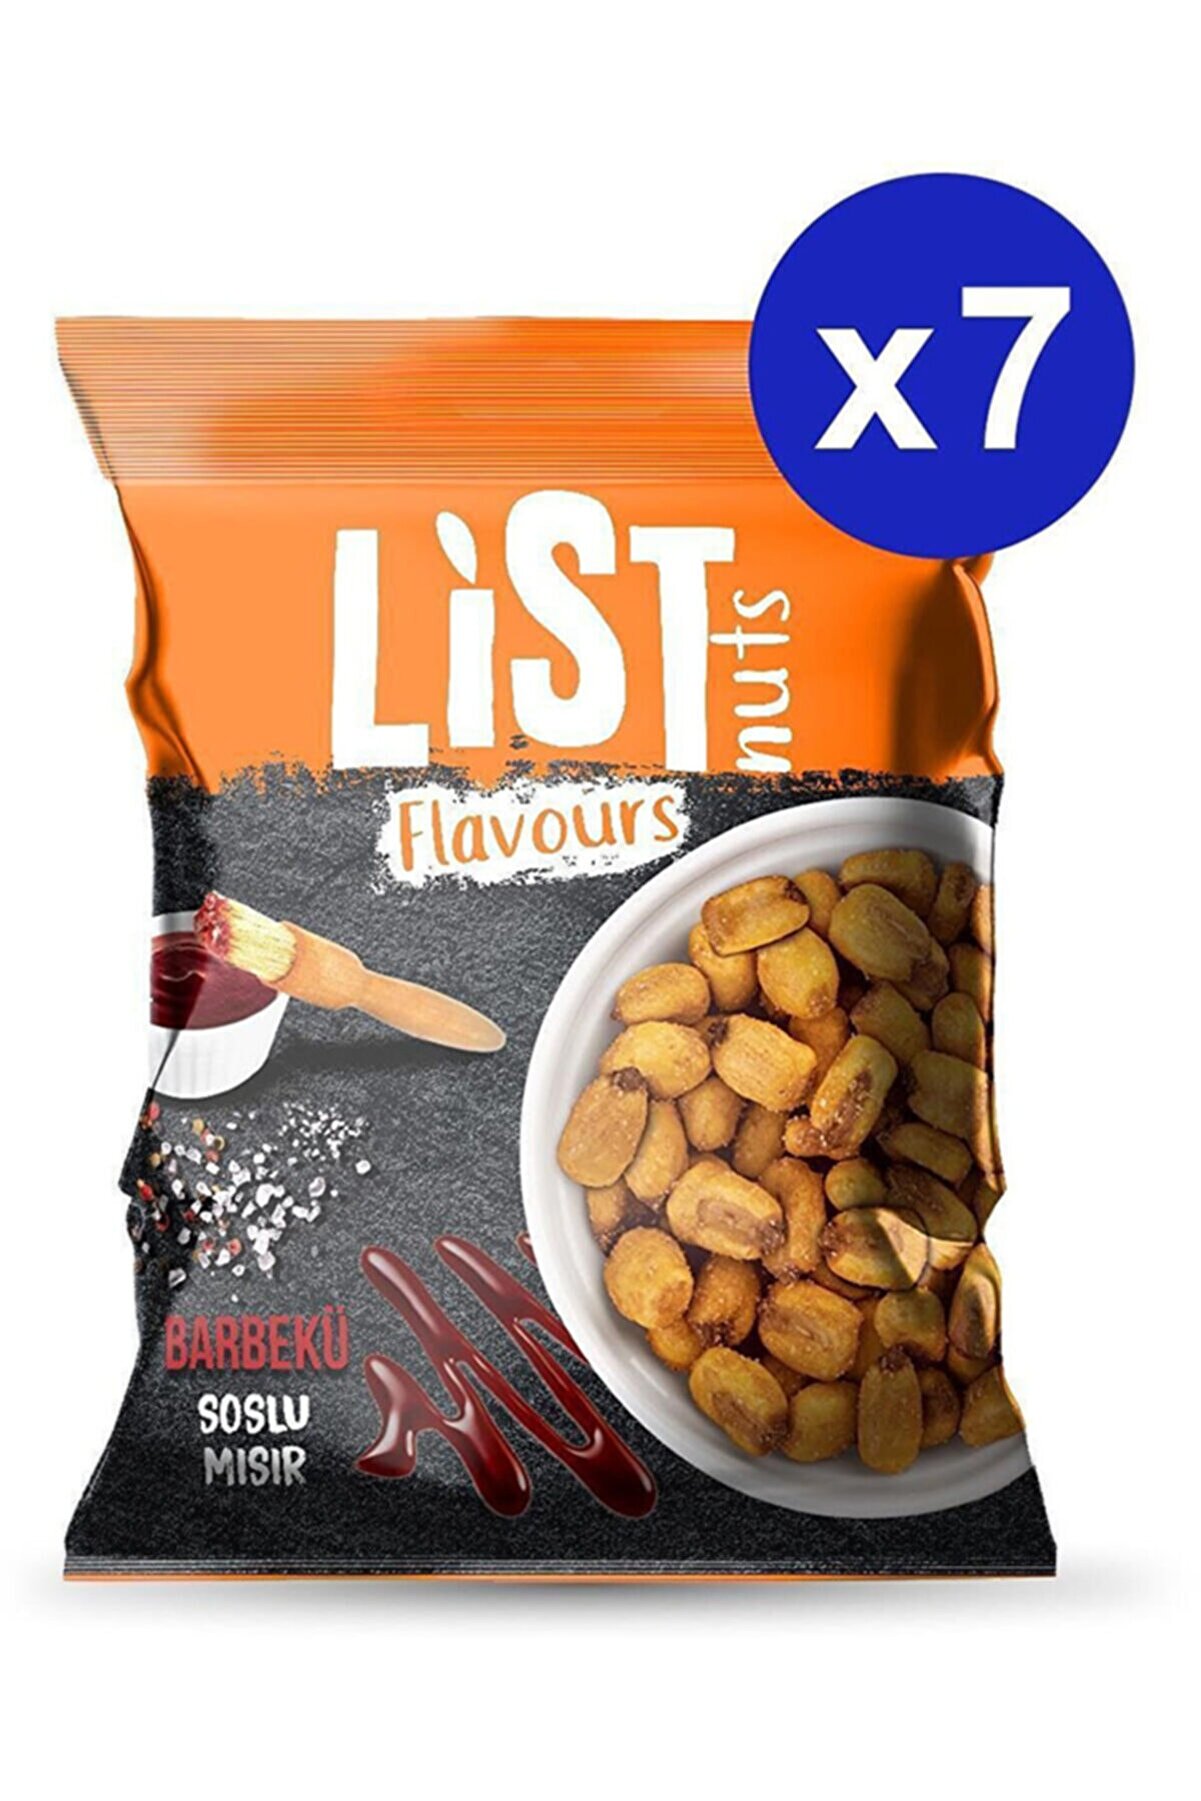 List Flavours Barbekü Soslu Mısır 7 X 75 G